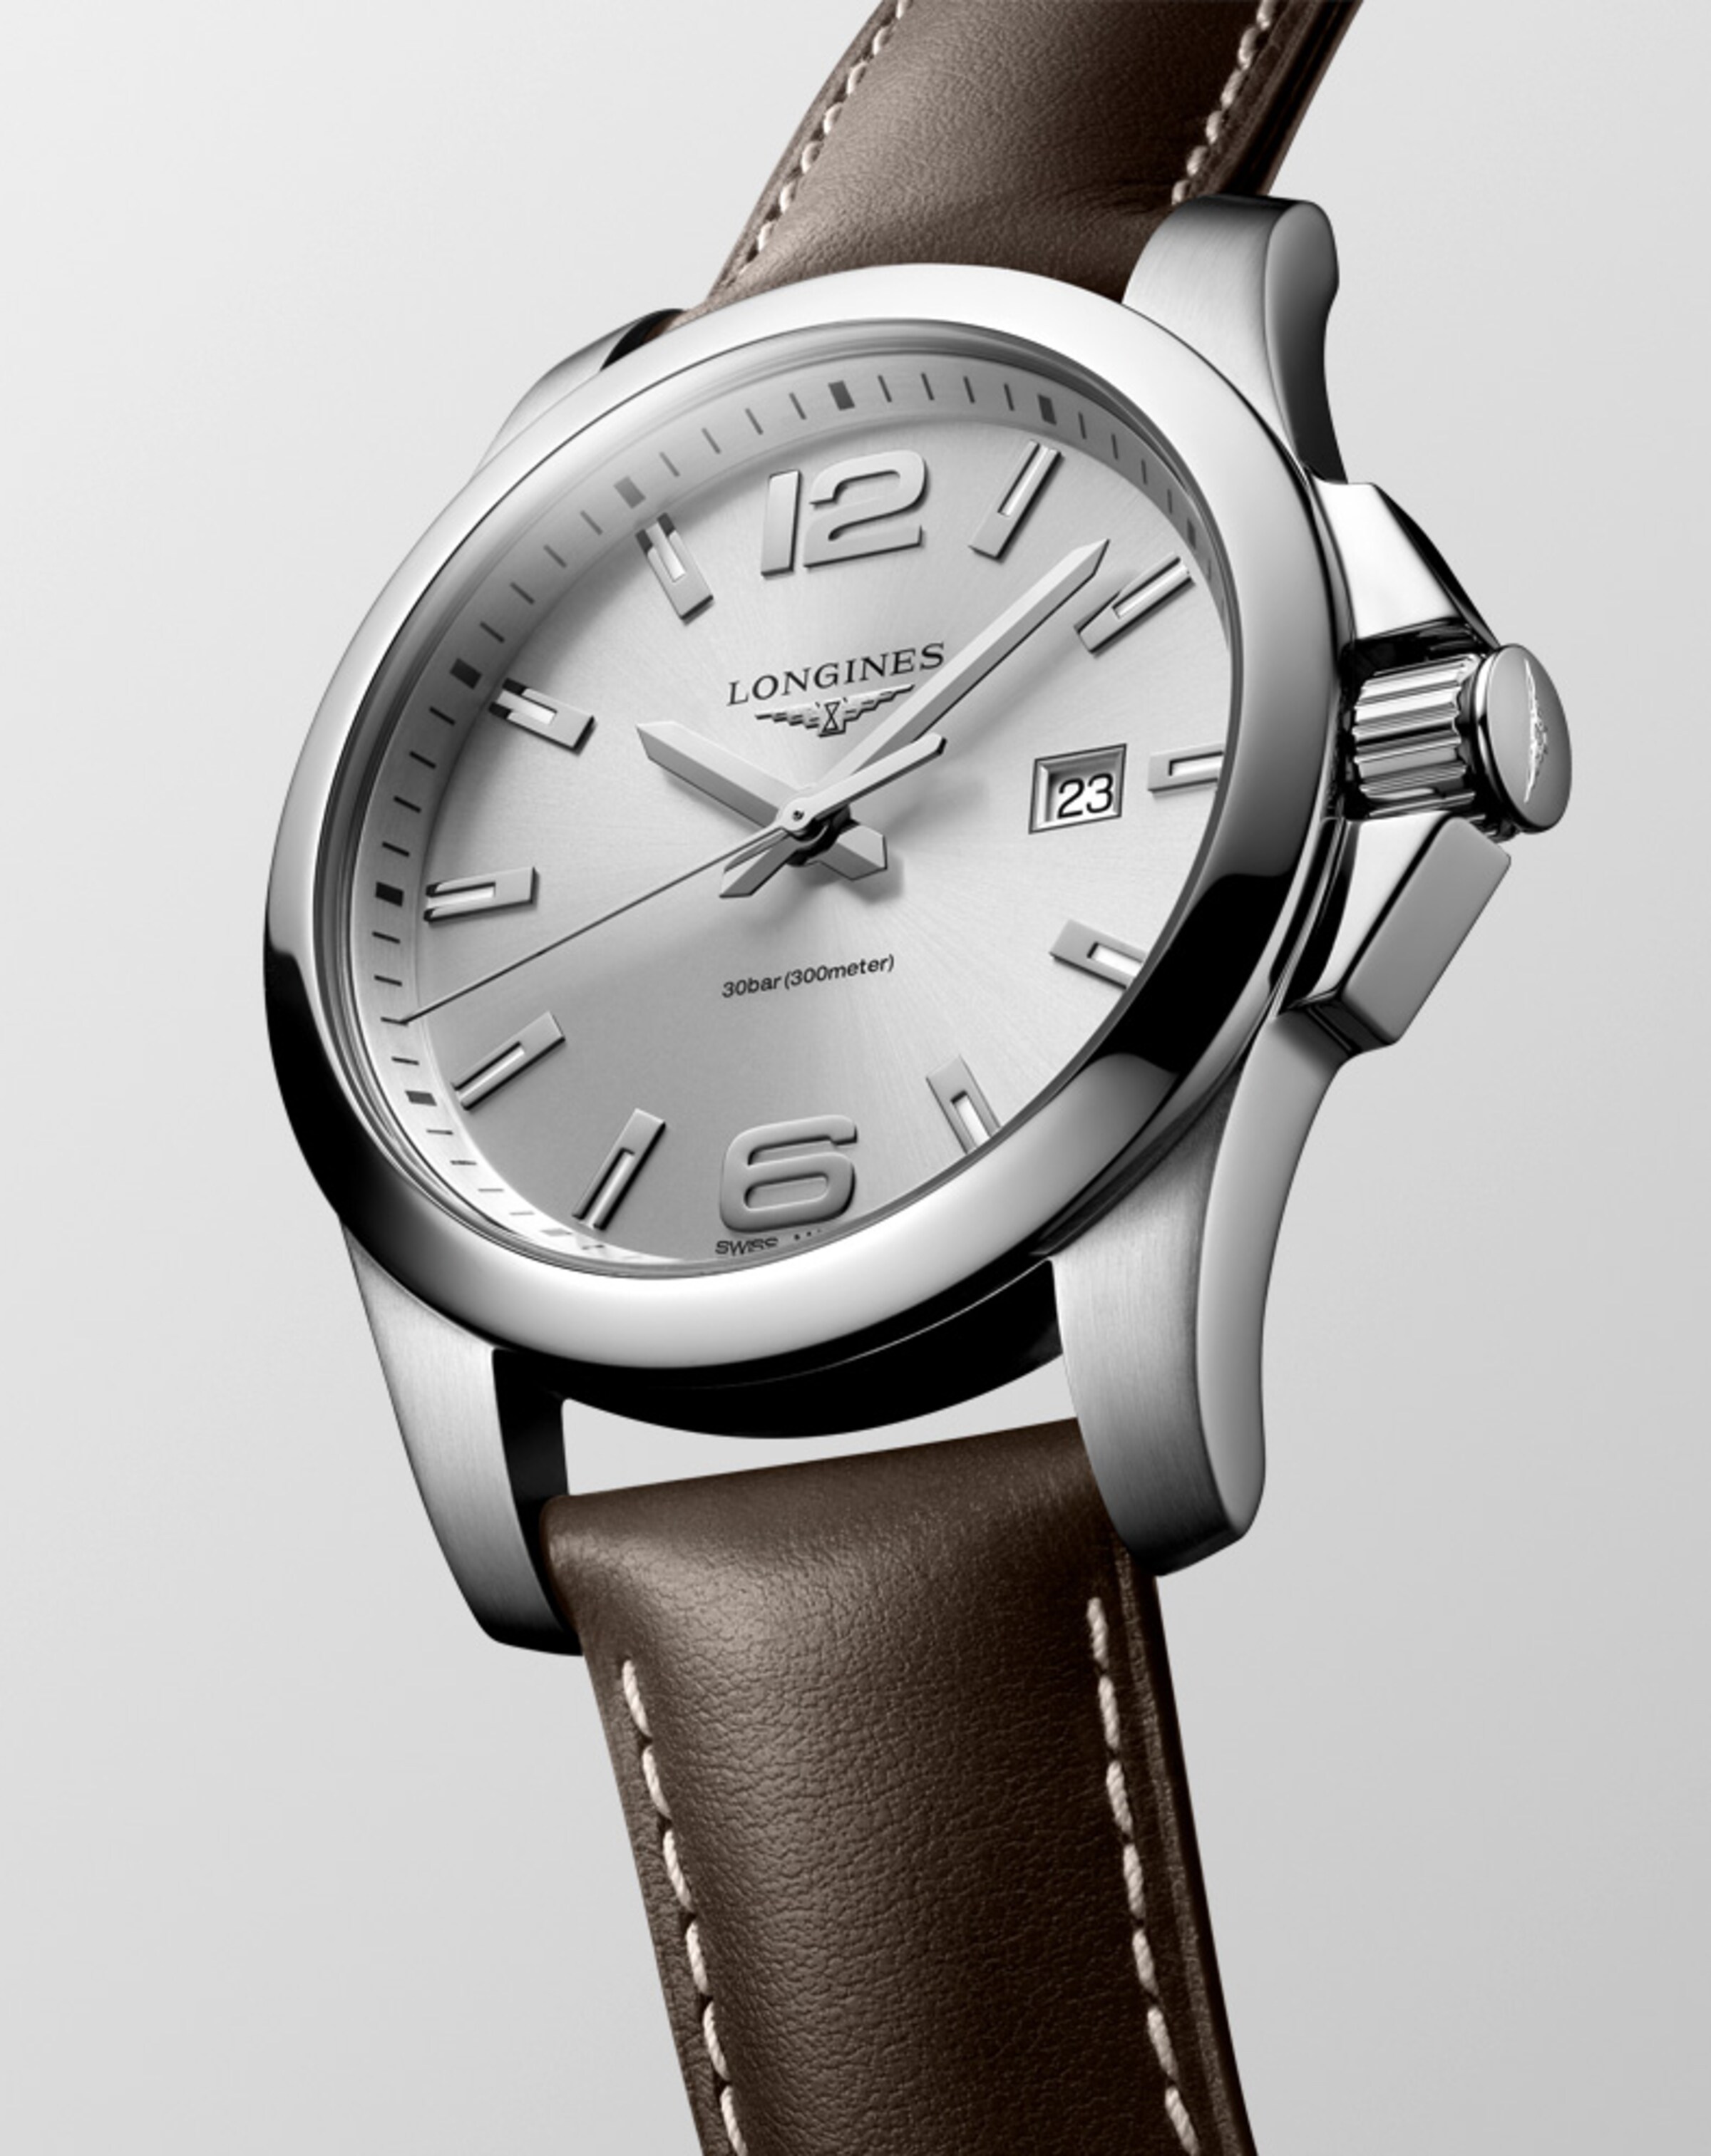 a Longines quartz watch